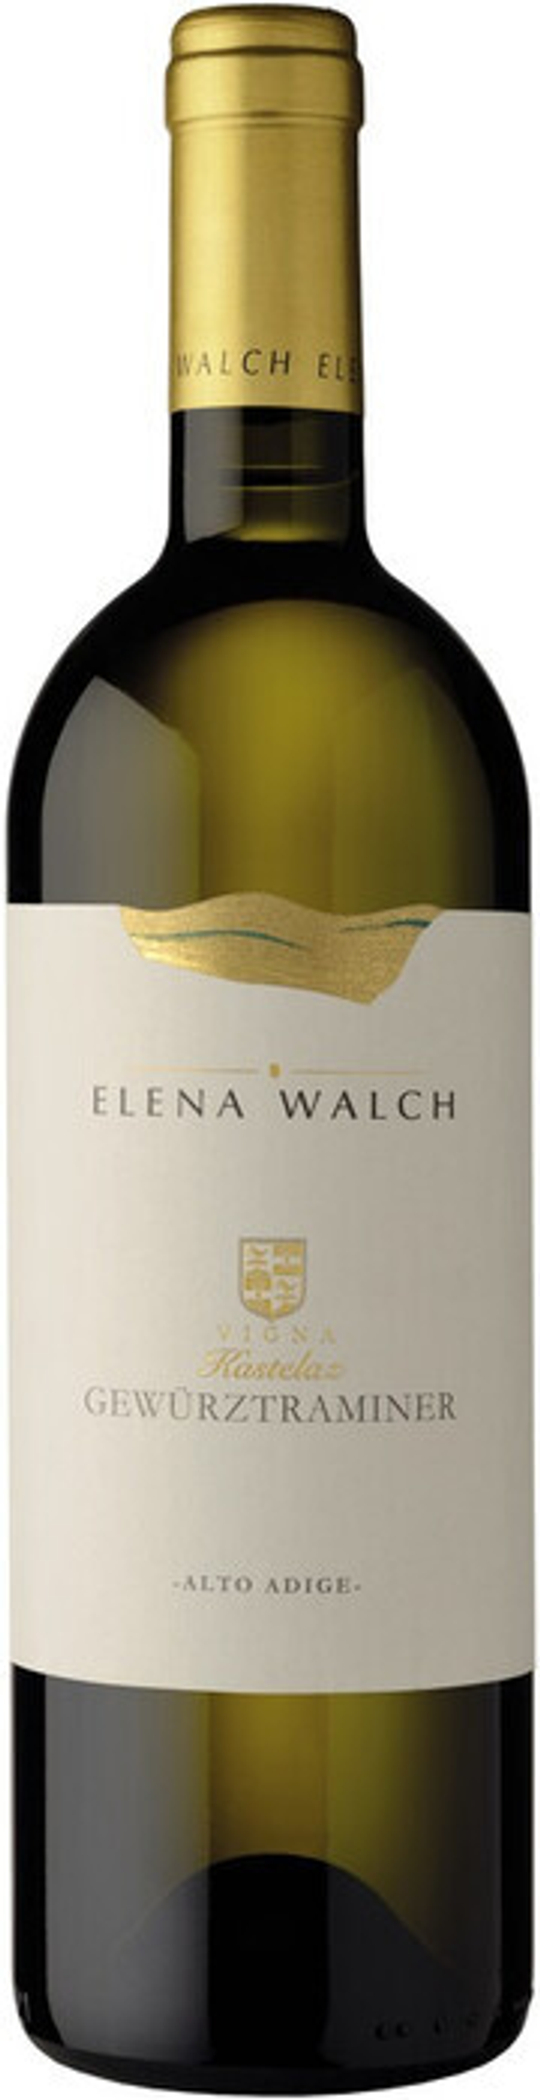 Вино Elena Walch Gewurztraminer Kastelaz Alto Adige DOC, 0,75 л.